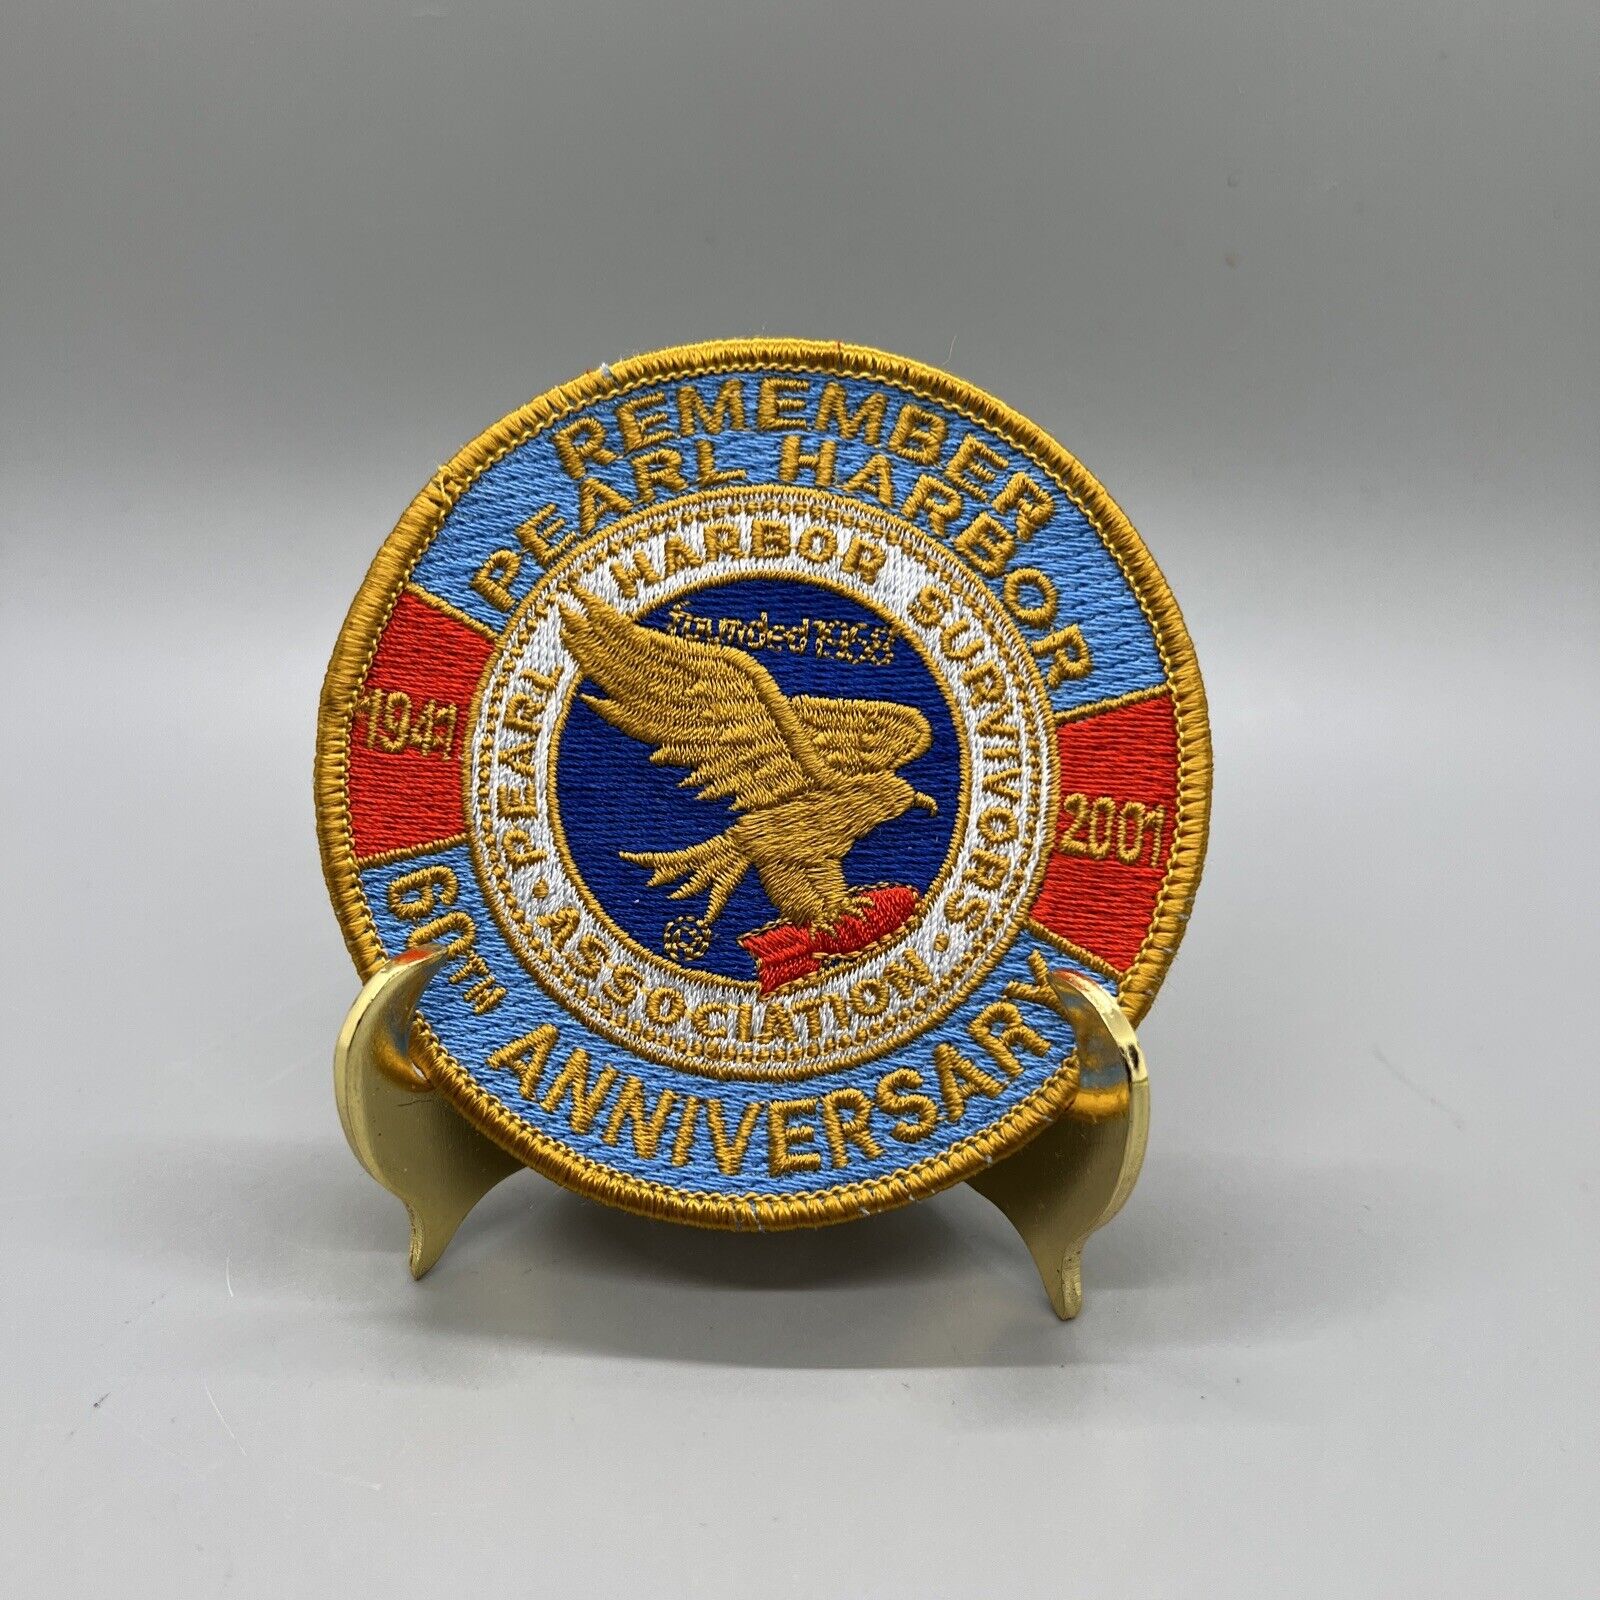 Pearl Harbor Patch Survivors Association eagle Emblem WWII Collectible 3.5” War